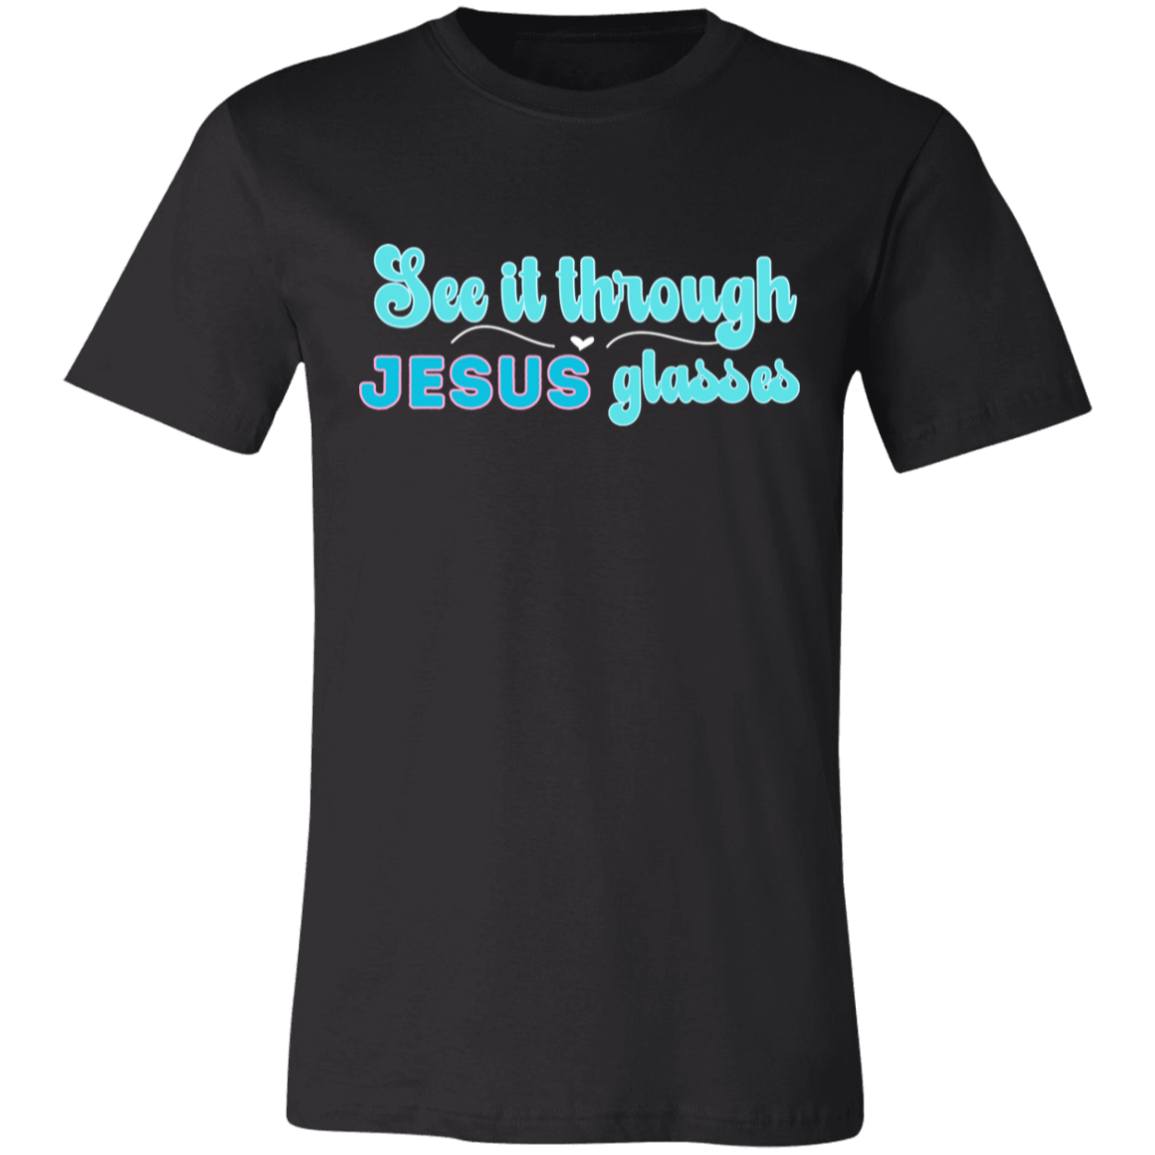 See it through Jesus glasses - T-Shirt